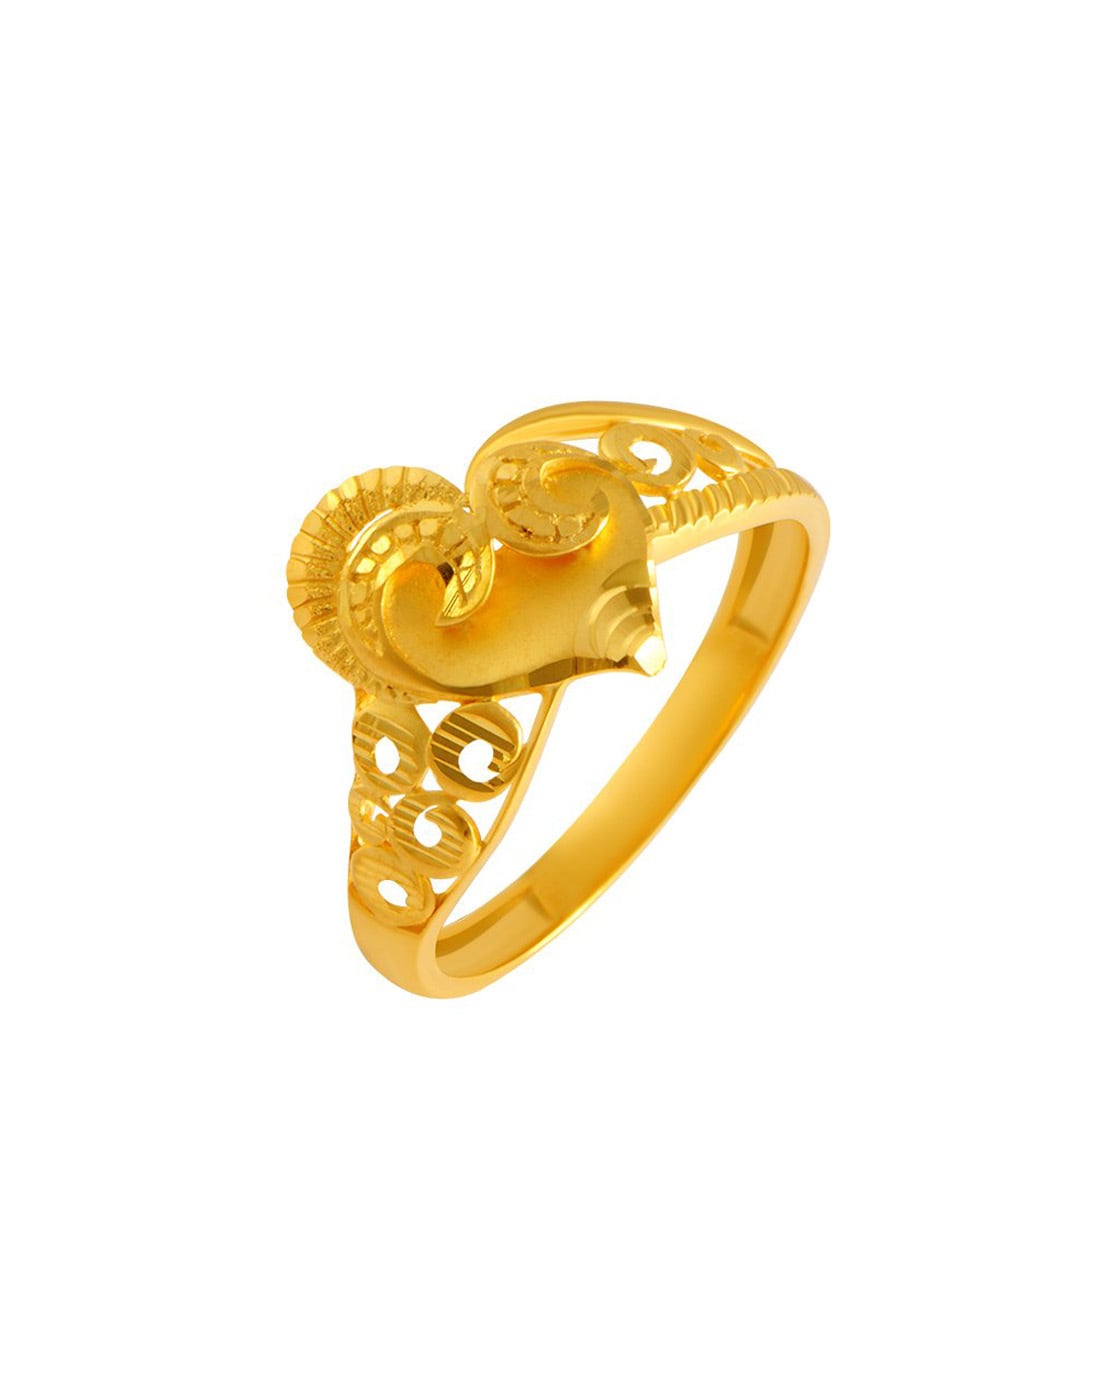 P.C. Chandra Jewellers 22k (916) BIS Hallmark Yellow Gold Ring for Men  (Size 23) - 5.45 Grams : Amazon.in: Jewellery